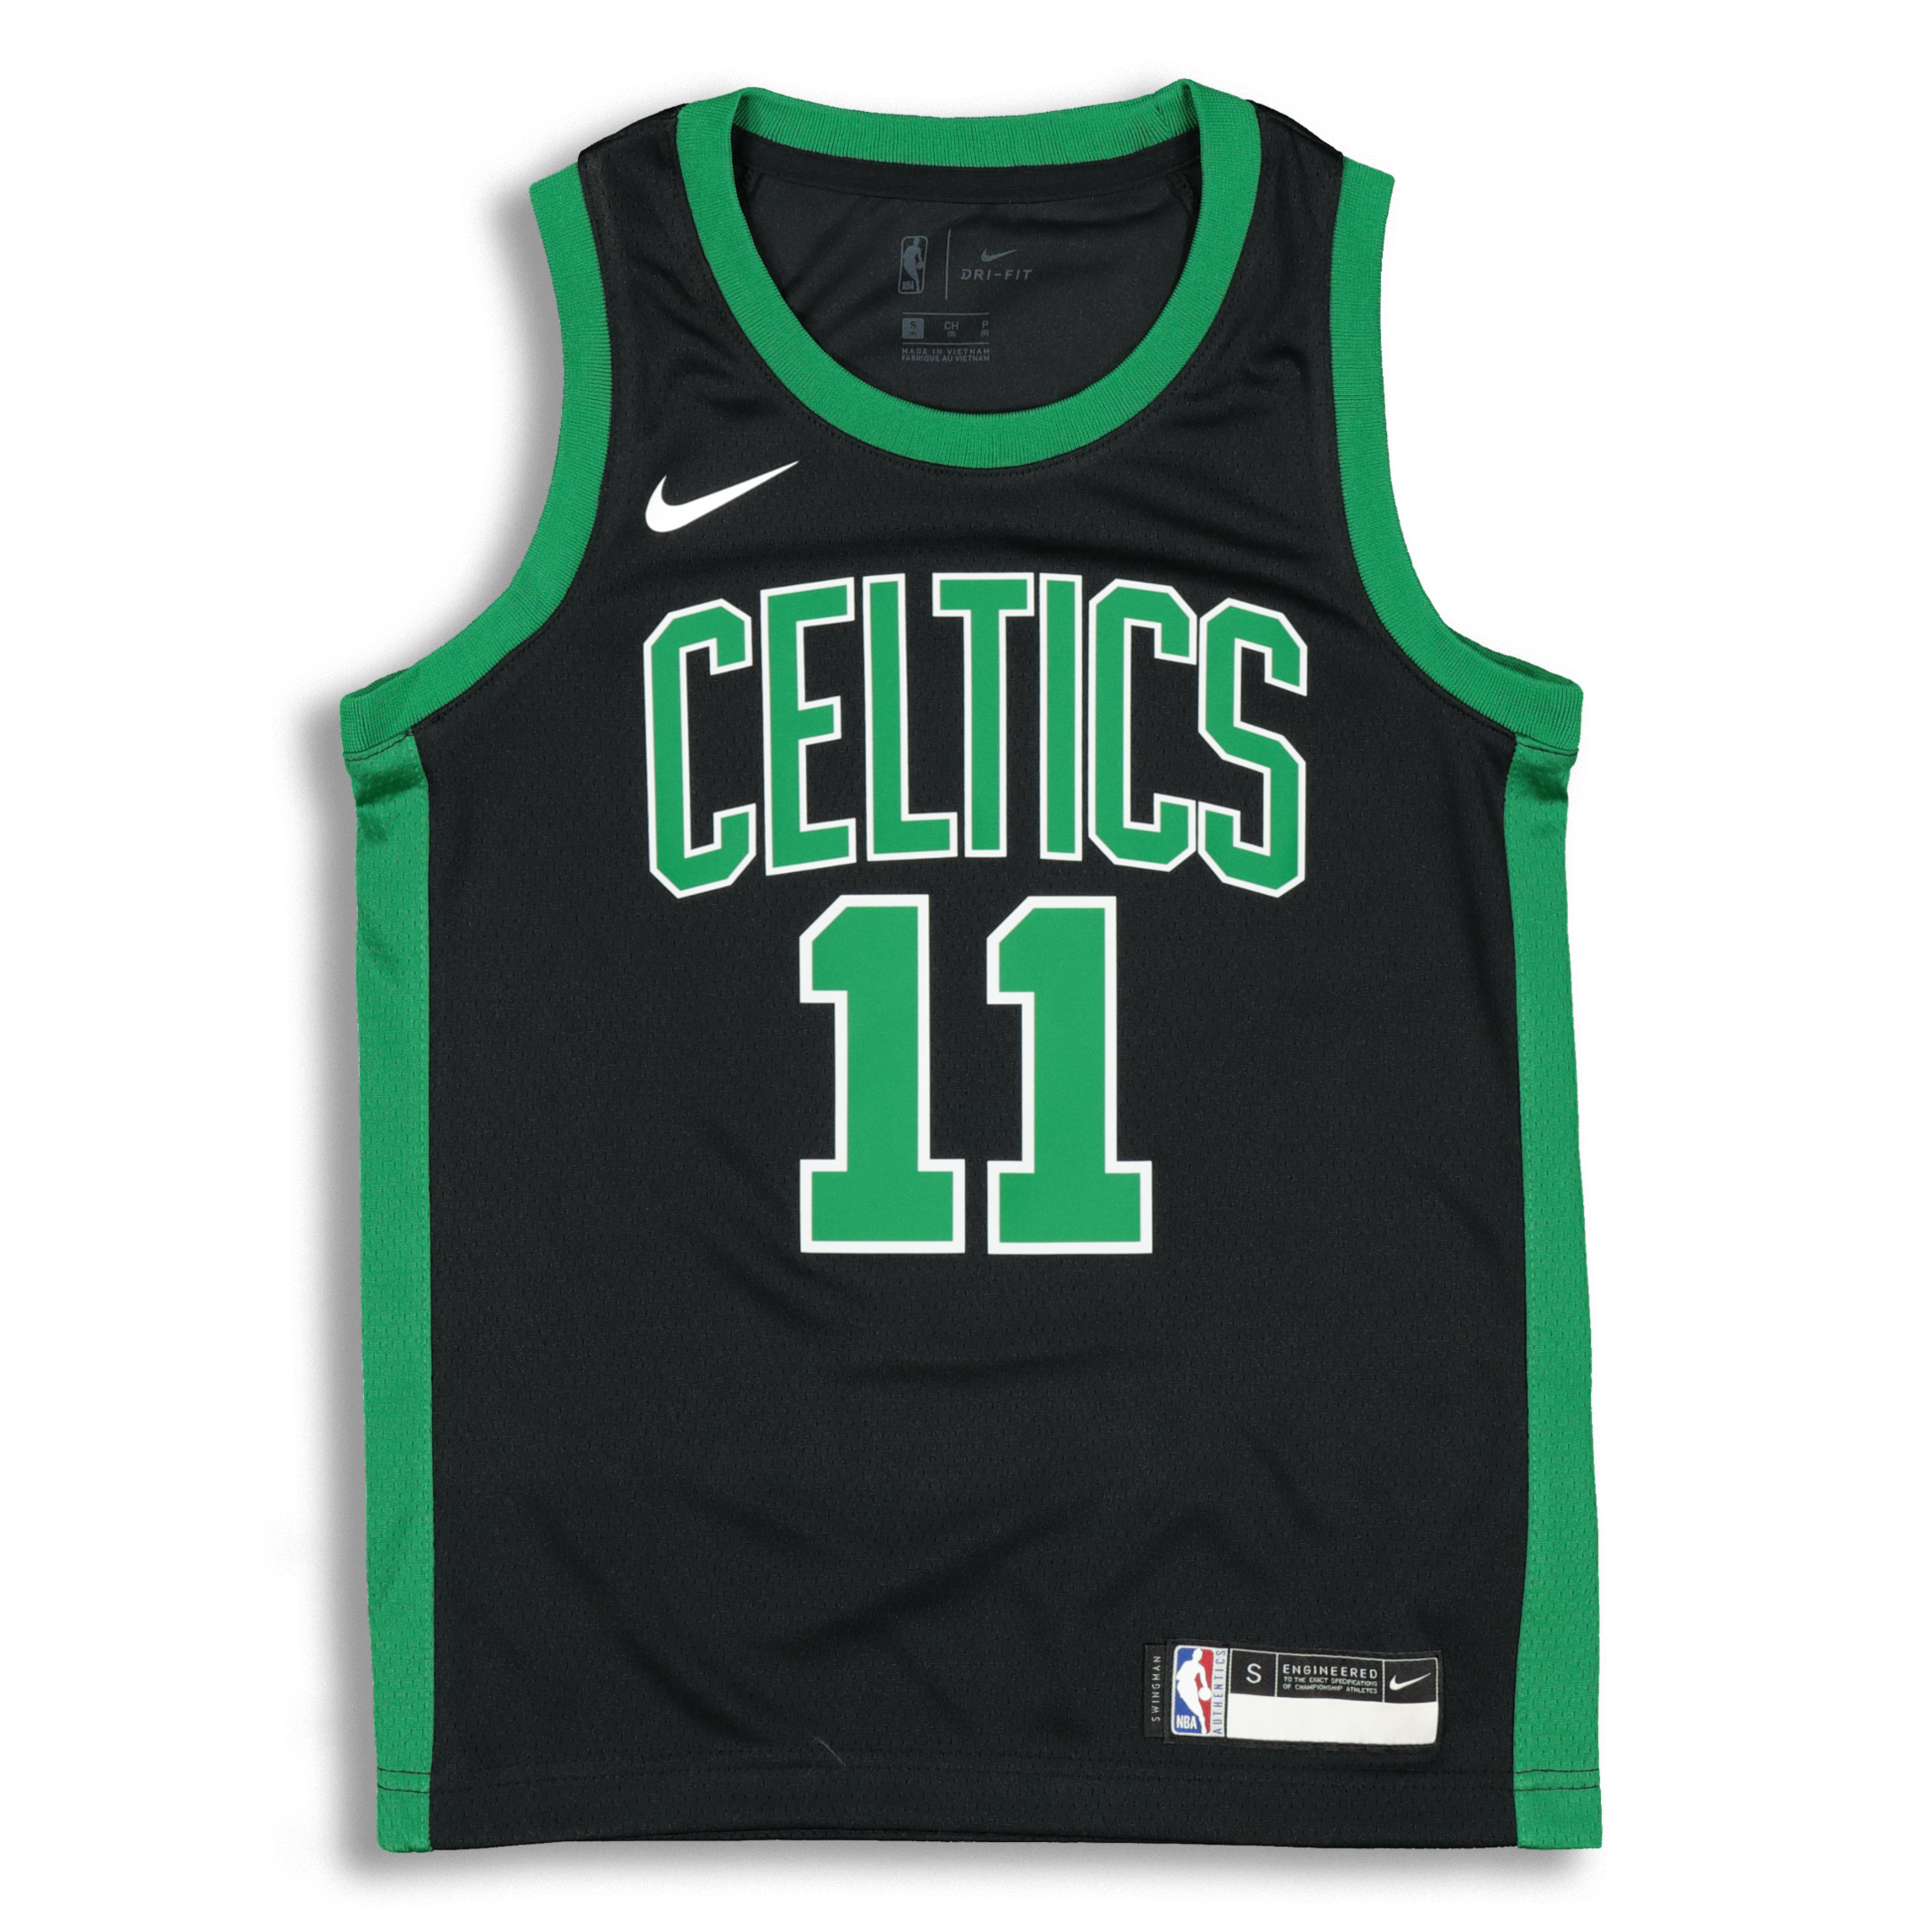 boston celtics 2019 jersey